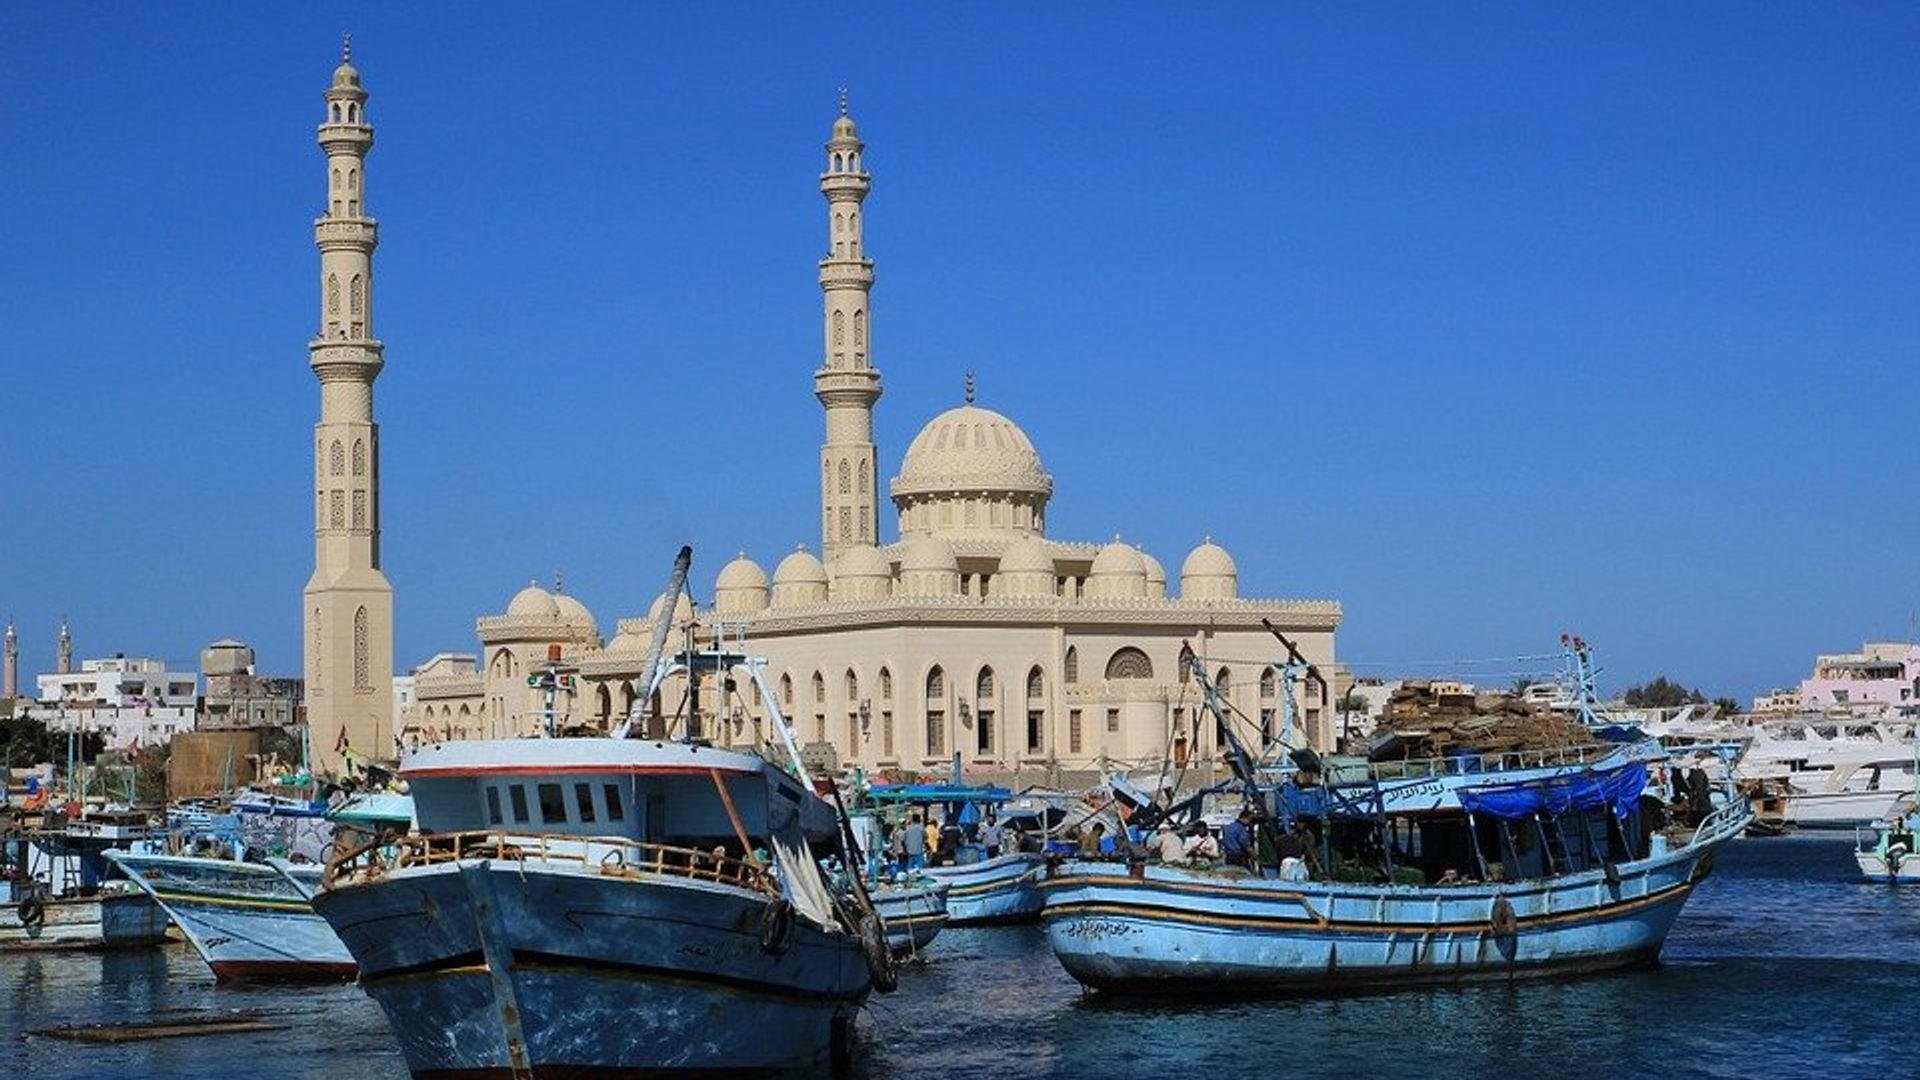 Craciun 2021 - Sejur plaja Hurghada, Egipt, 8 zile - zbor charter